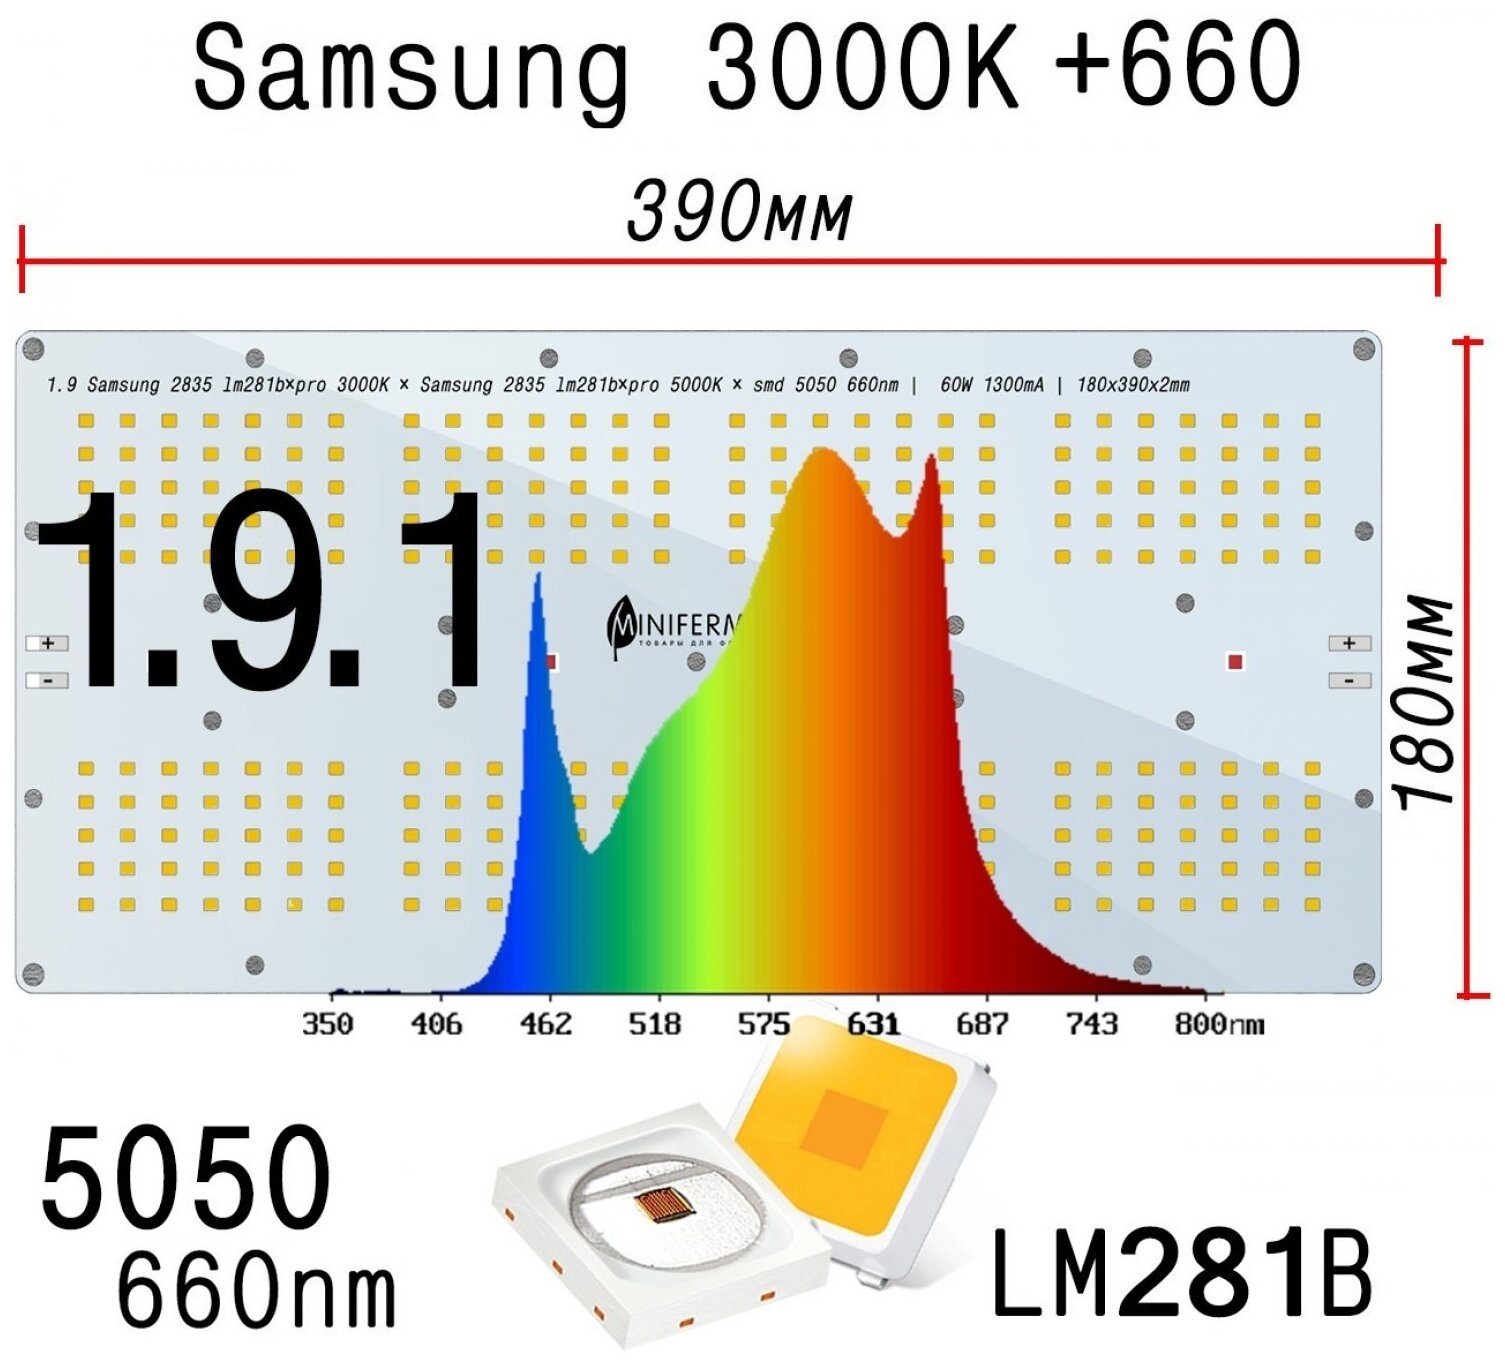 Модуль 1.9.1 Quantum board Samsung lm281b+pro 3000K + SMD 5050 660nm / Светодиодный модуль для растений / Фитолампа